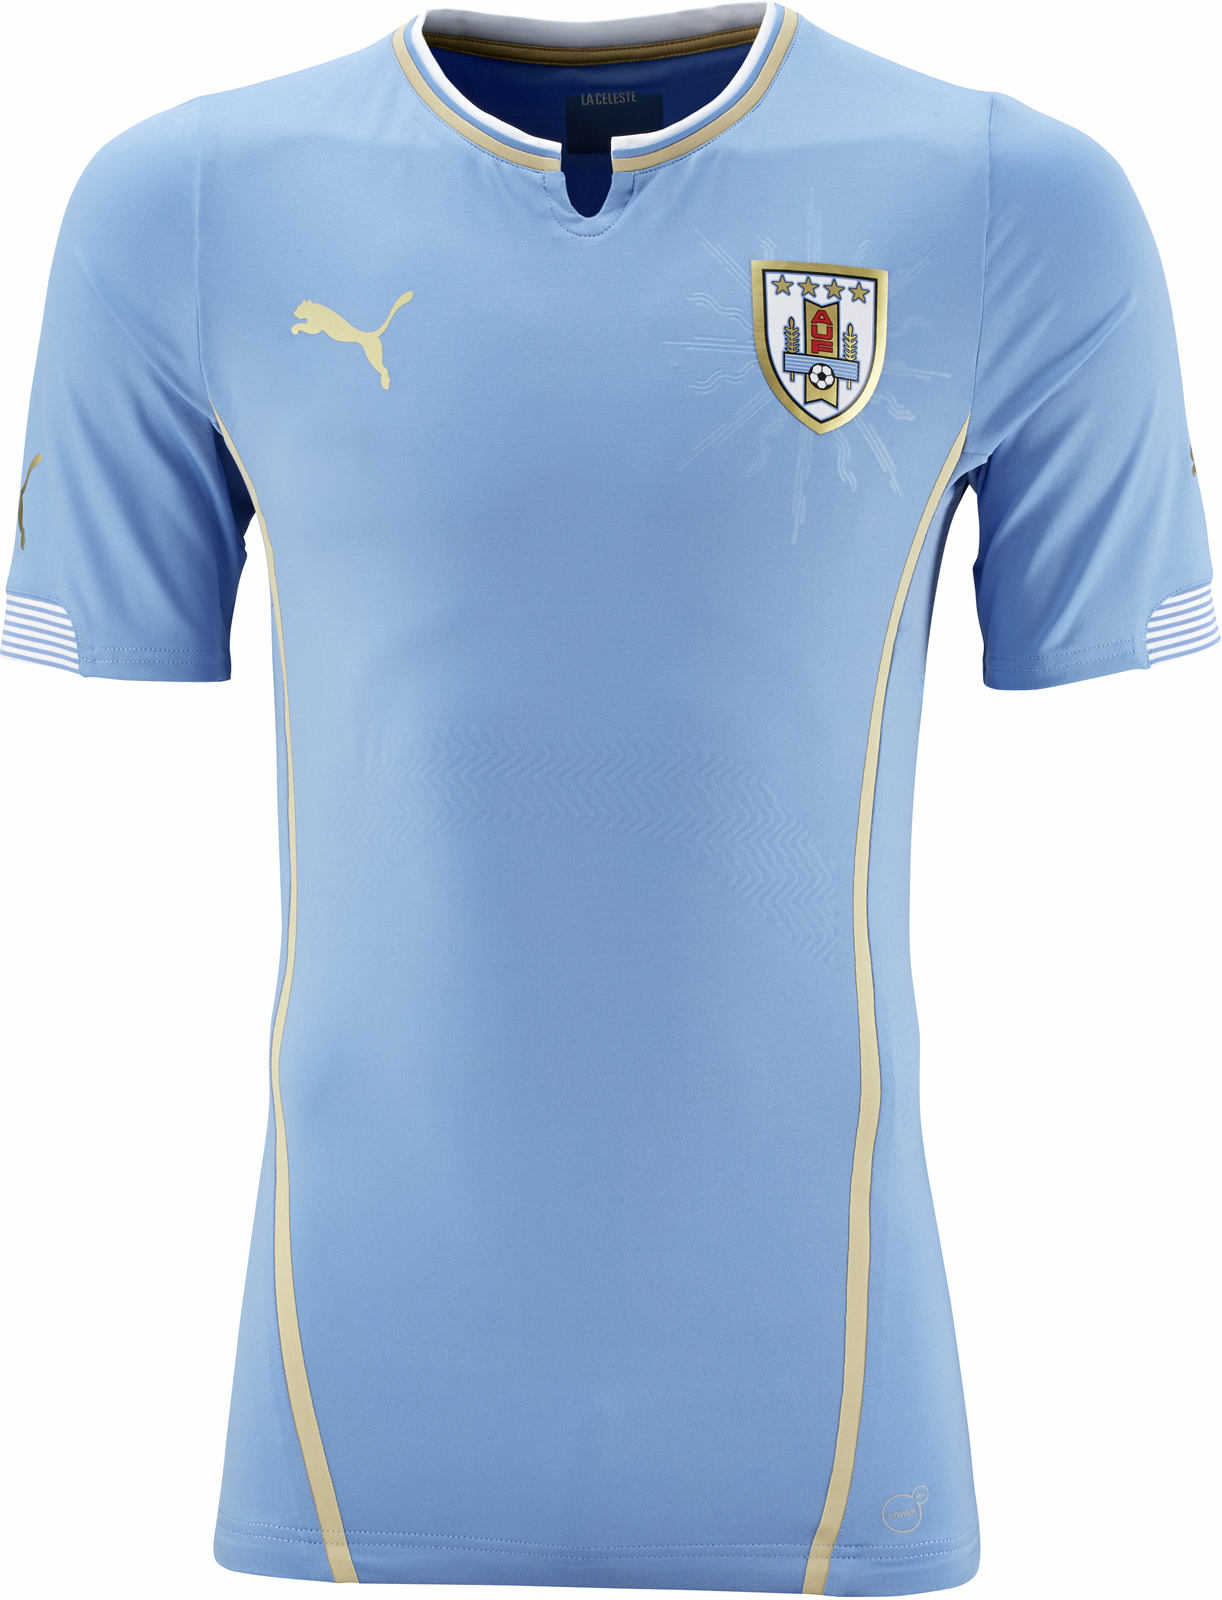 Uruguay+2014+World+Cup+Home+Kit+(1).jpg